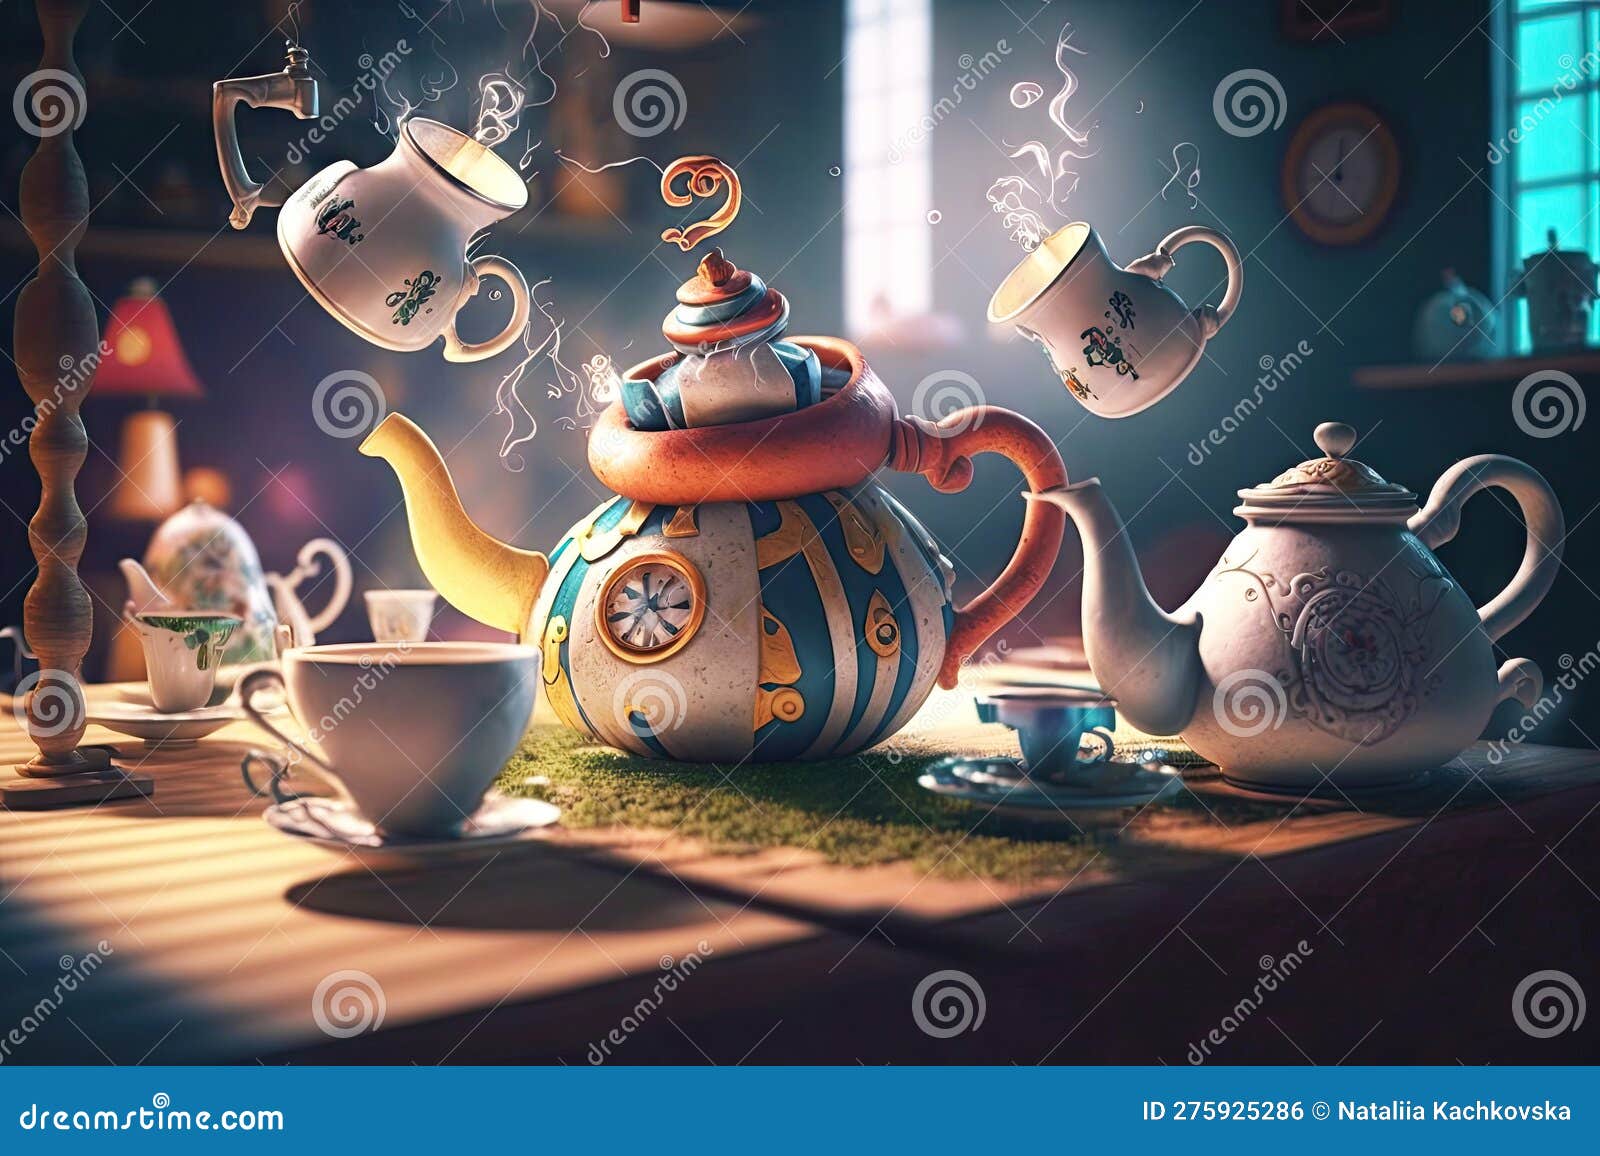 https://thumbs.dreamstime.com/z/scene-alice-wonderland-flying-teapots-cups-275925286.jpg